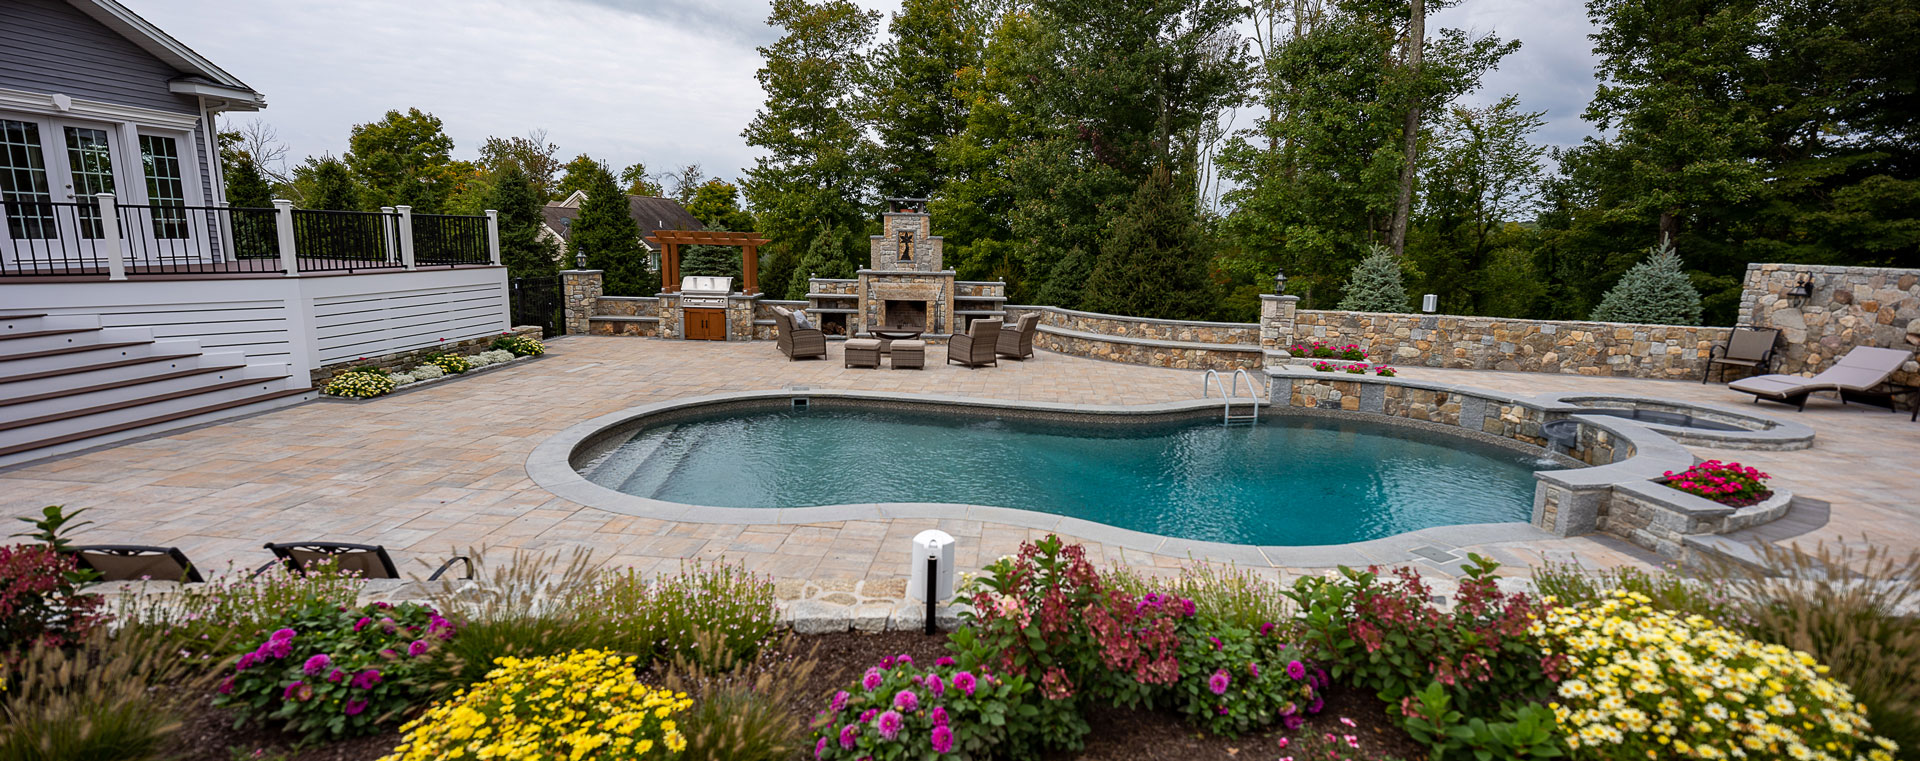 Beautiful Nejame & Sons backyard with pool